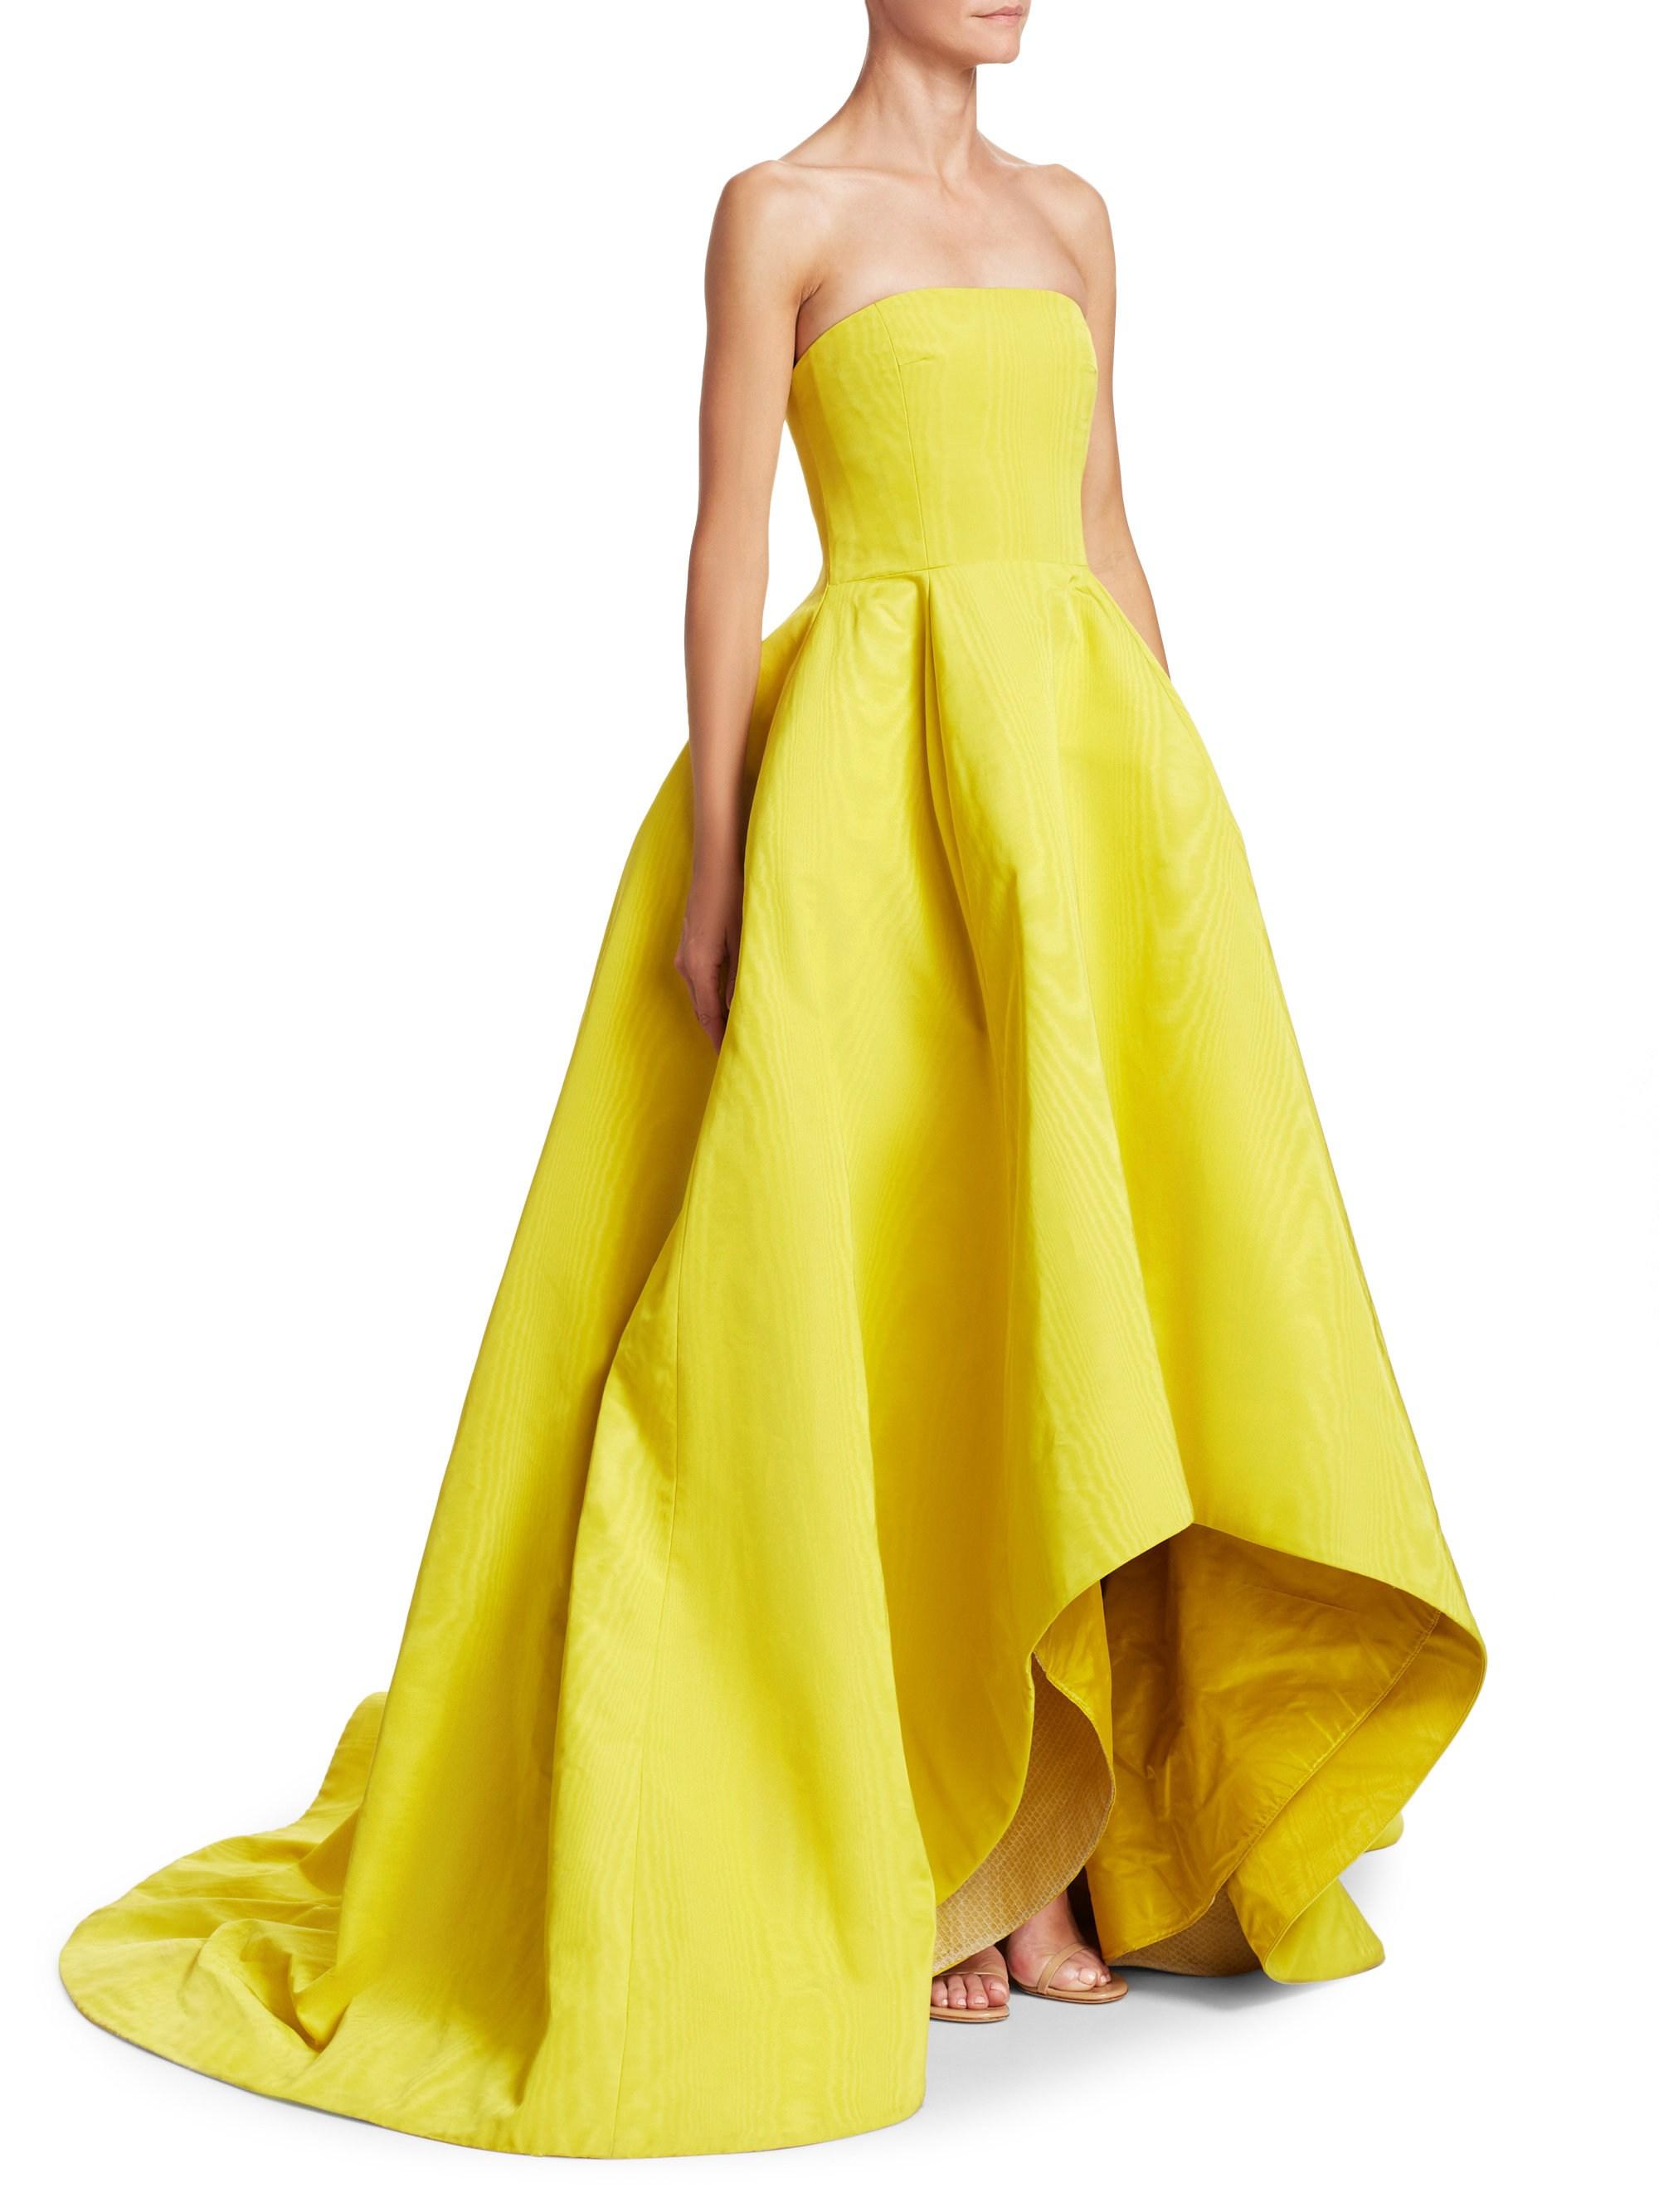 Oscar de la Renta Satin Strapless High-low Ball Gown in Yellow - Lyst